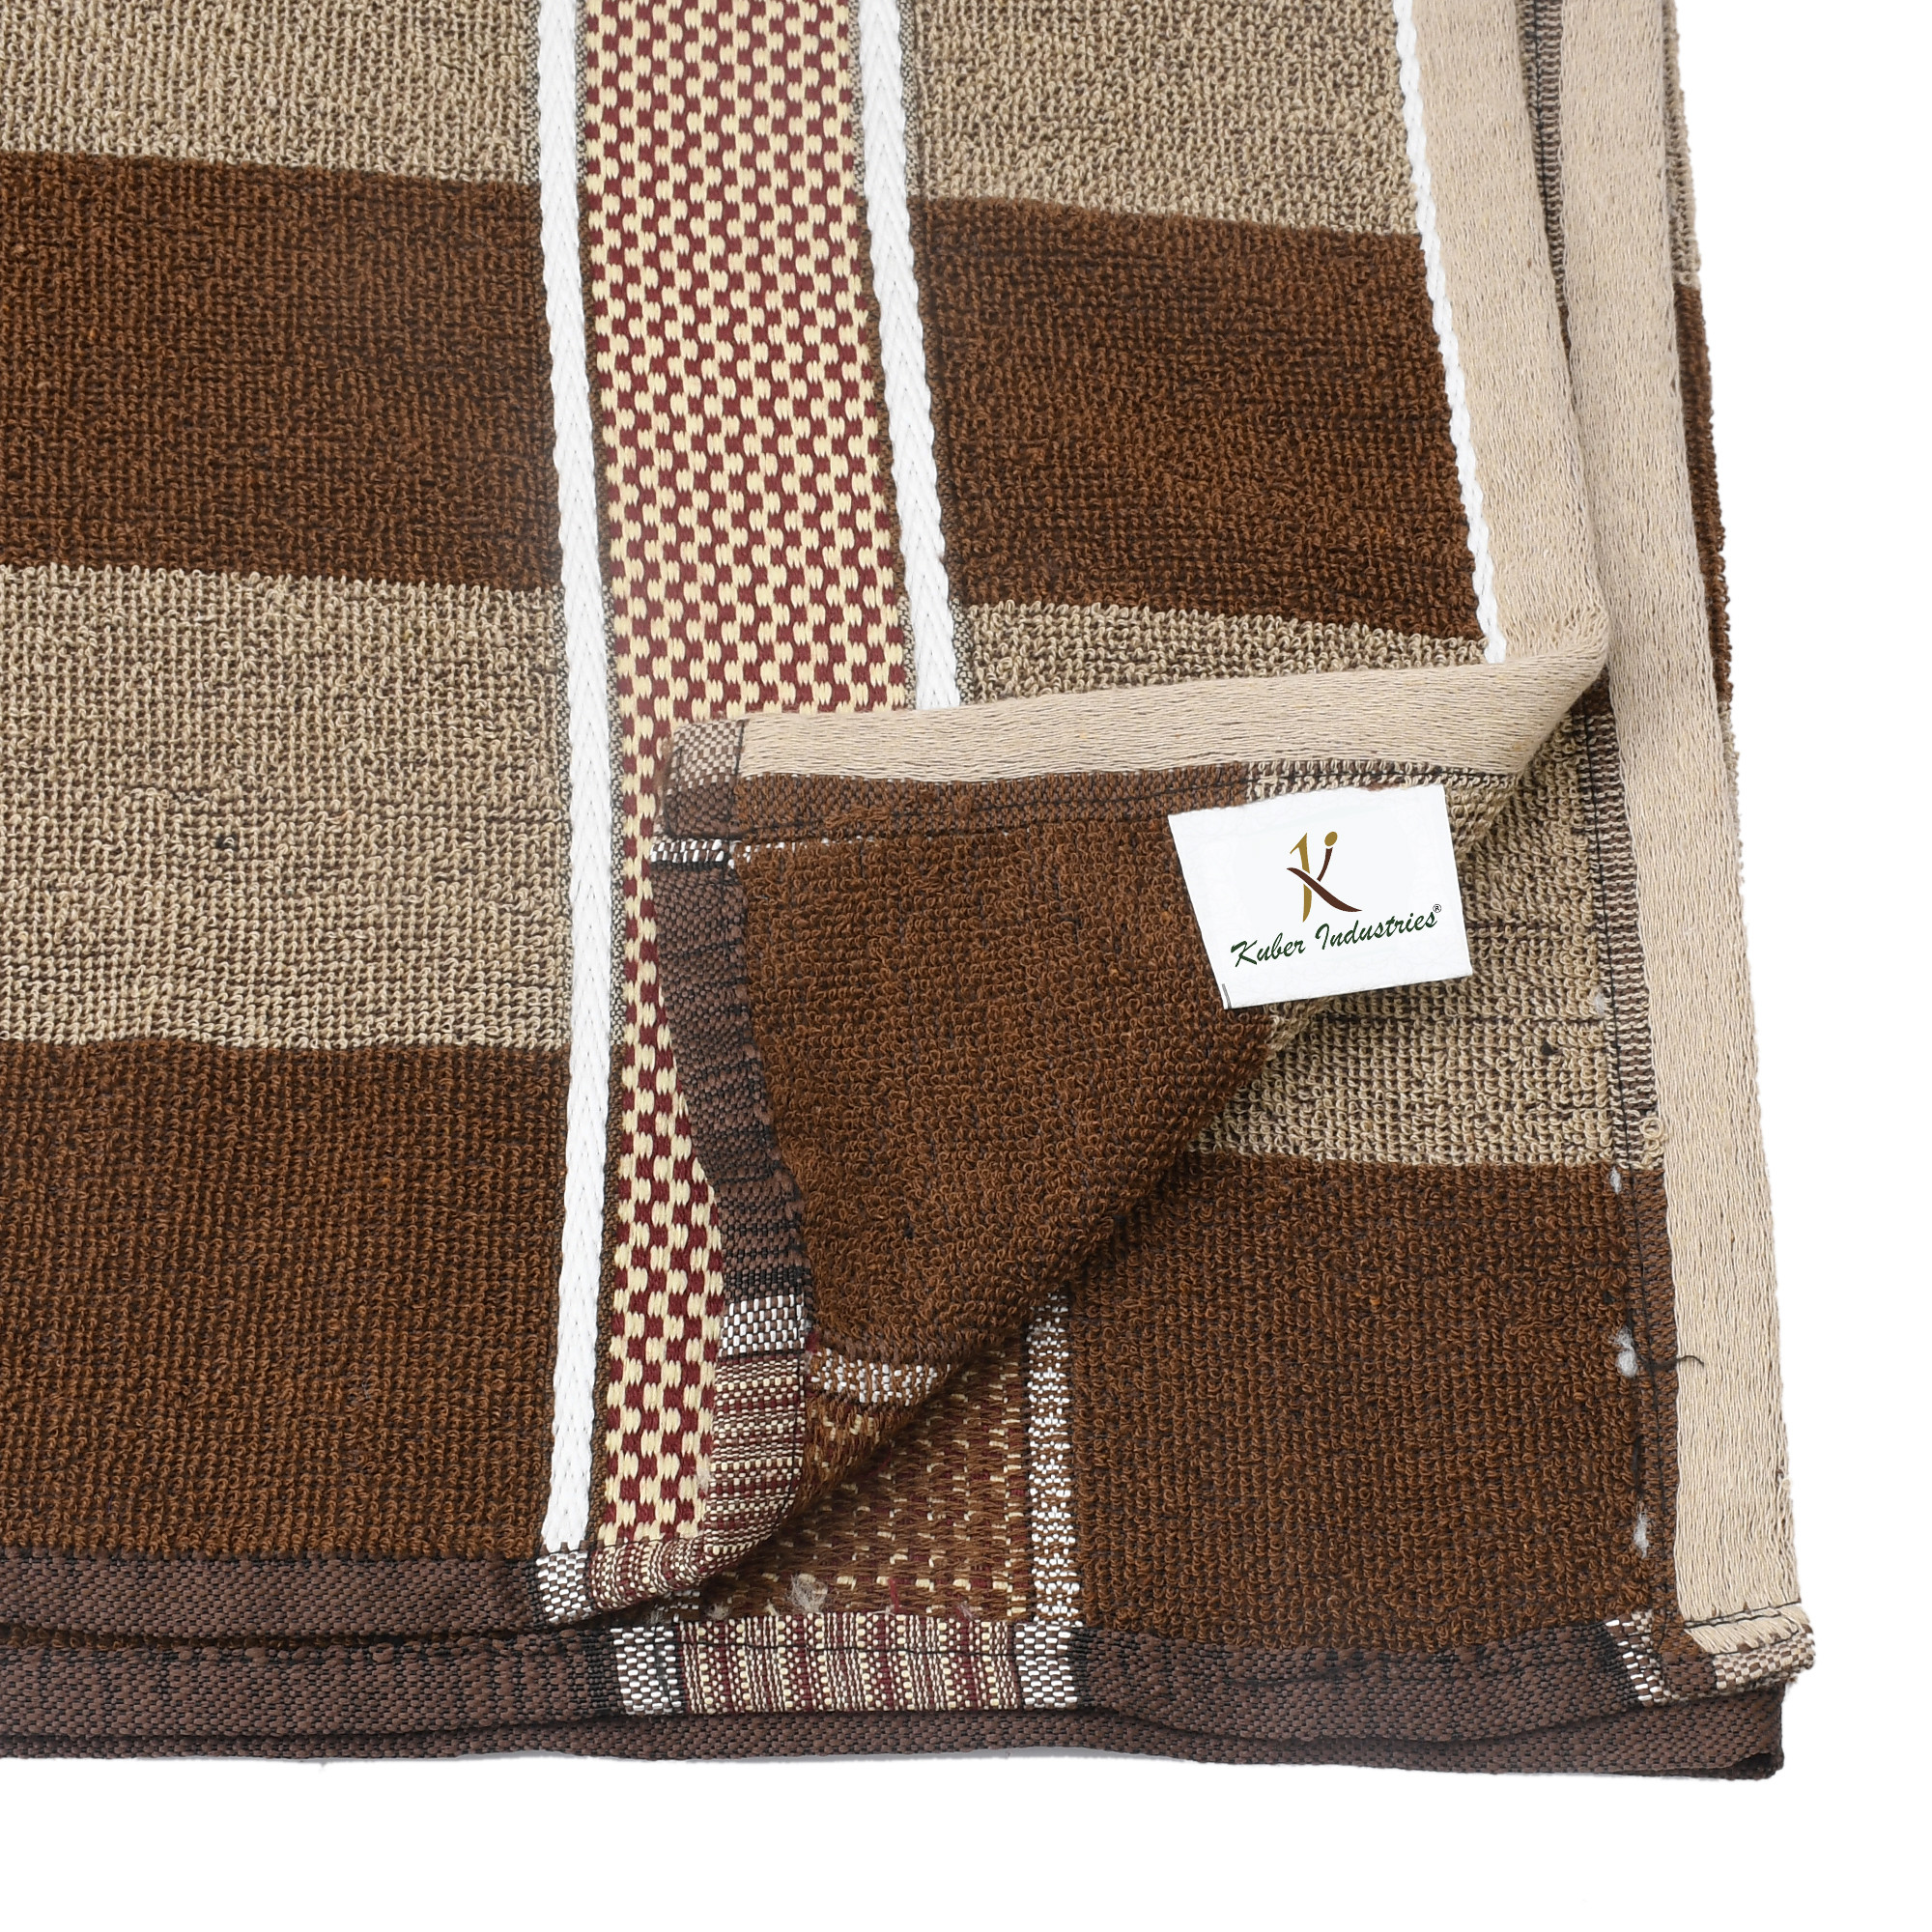 Kuber Industries Cotton Luxurious, Soft, 100% Cotton Towel, 30